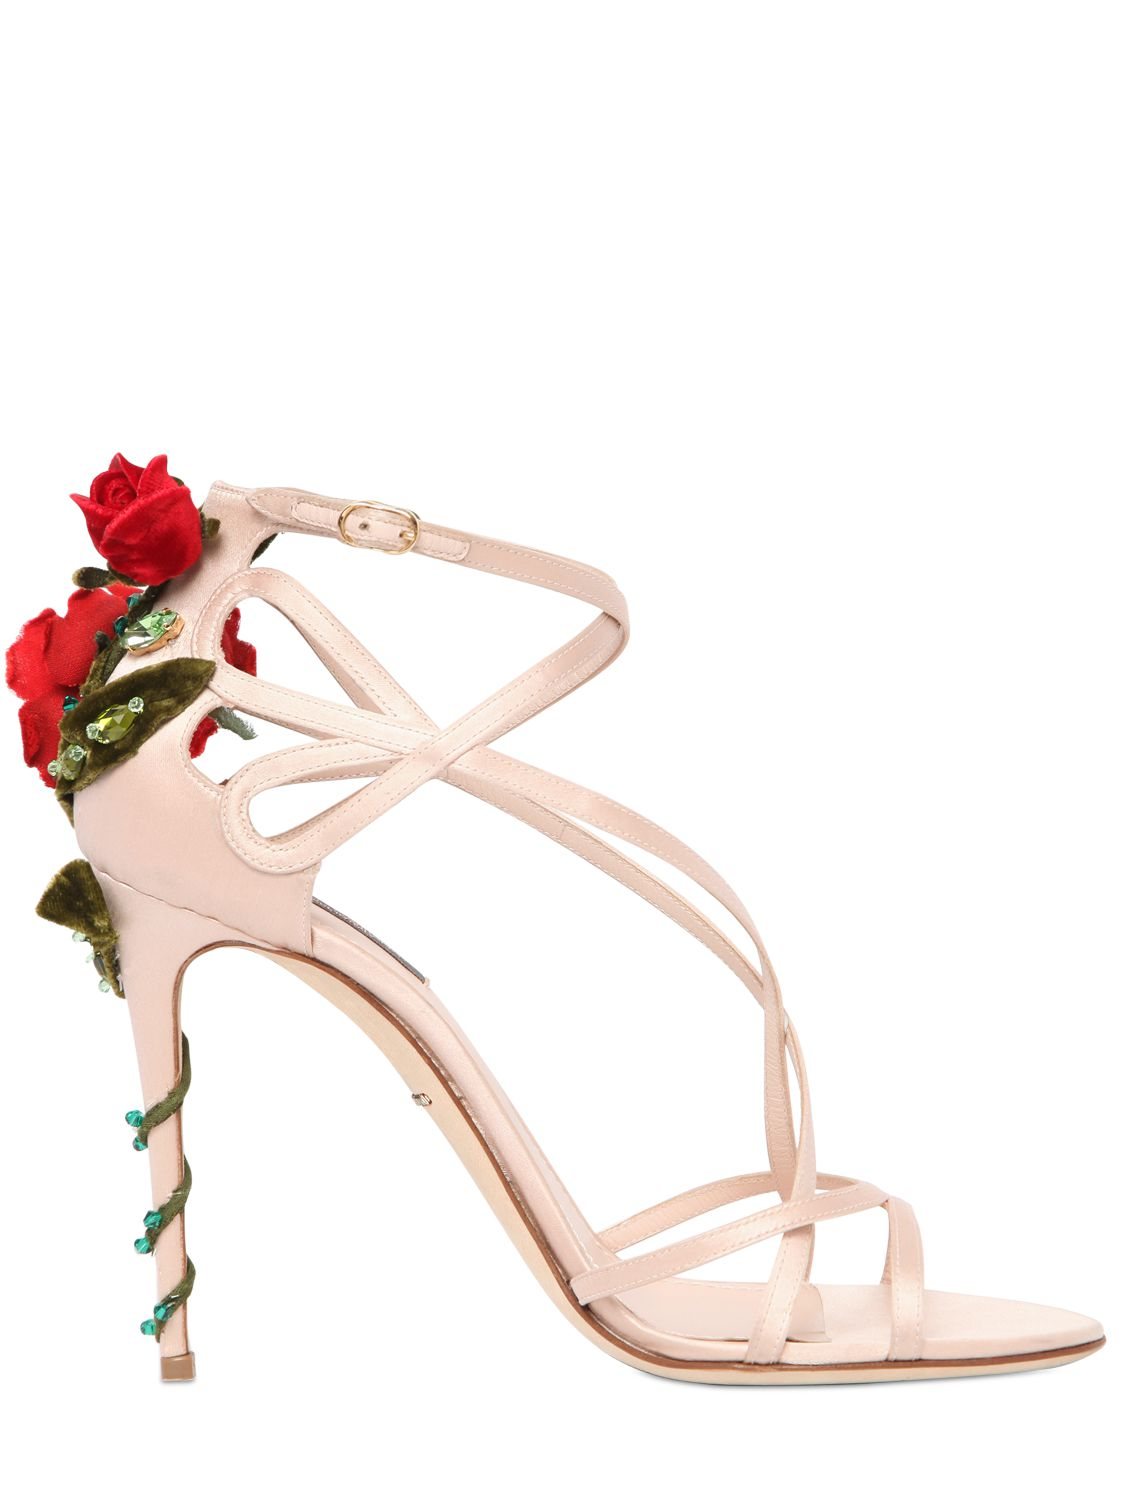 Dolce & gabbana Embellished Satin Sandals in Pink | Lyst